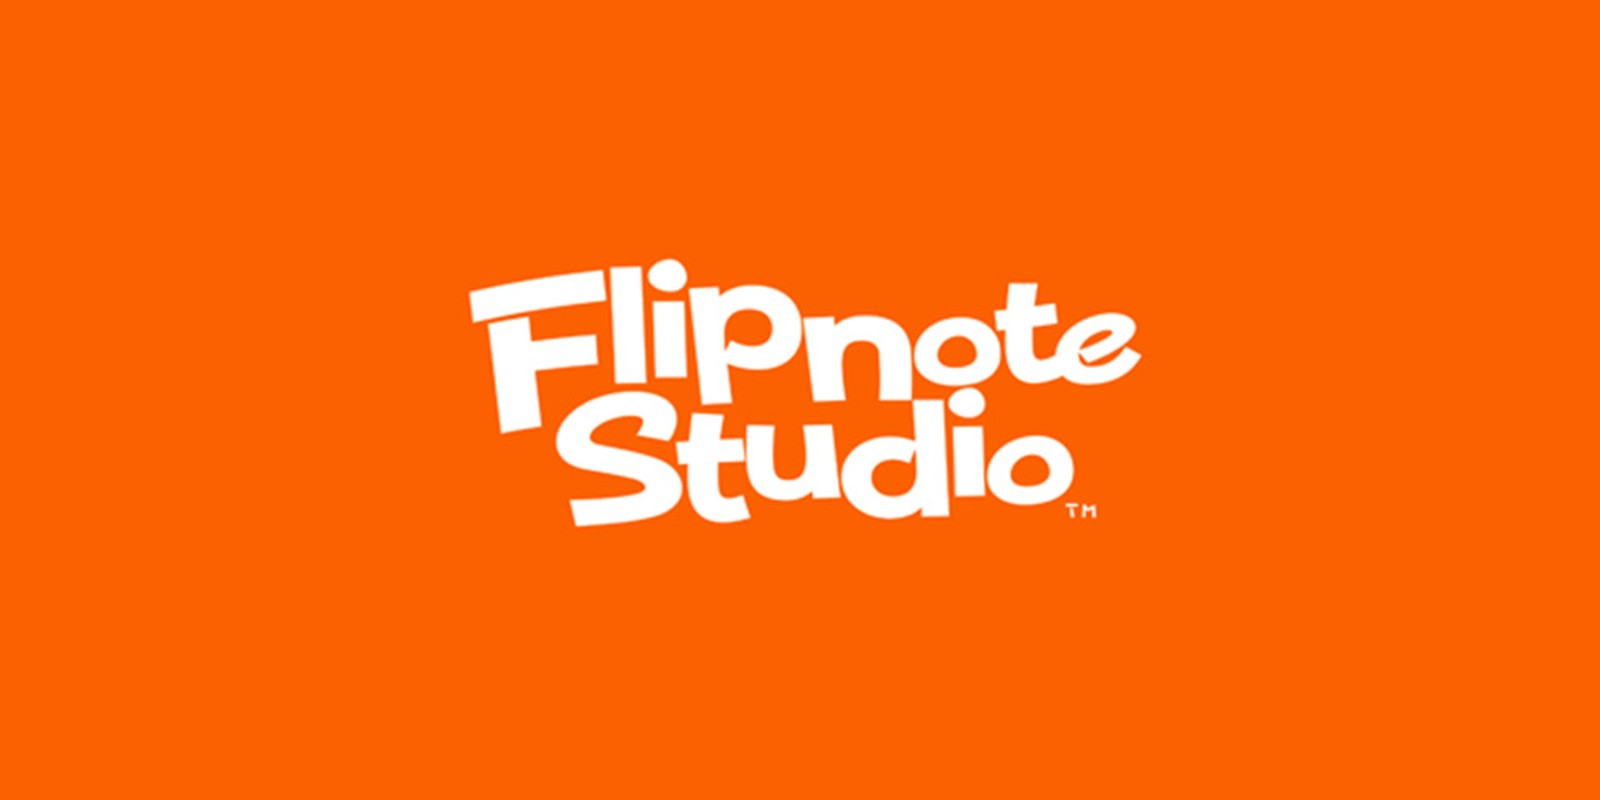 flipnote studio dsi nogba download